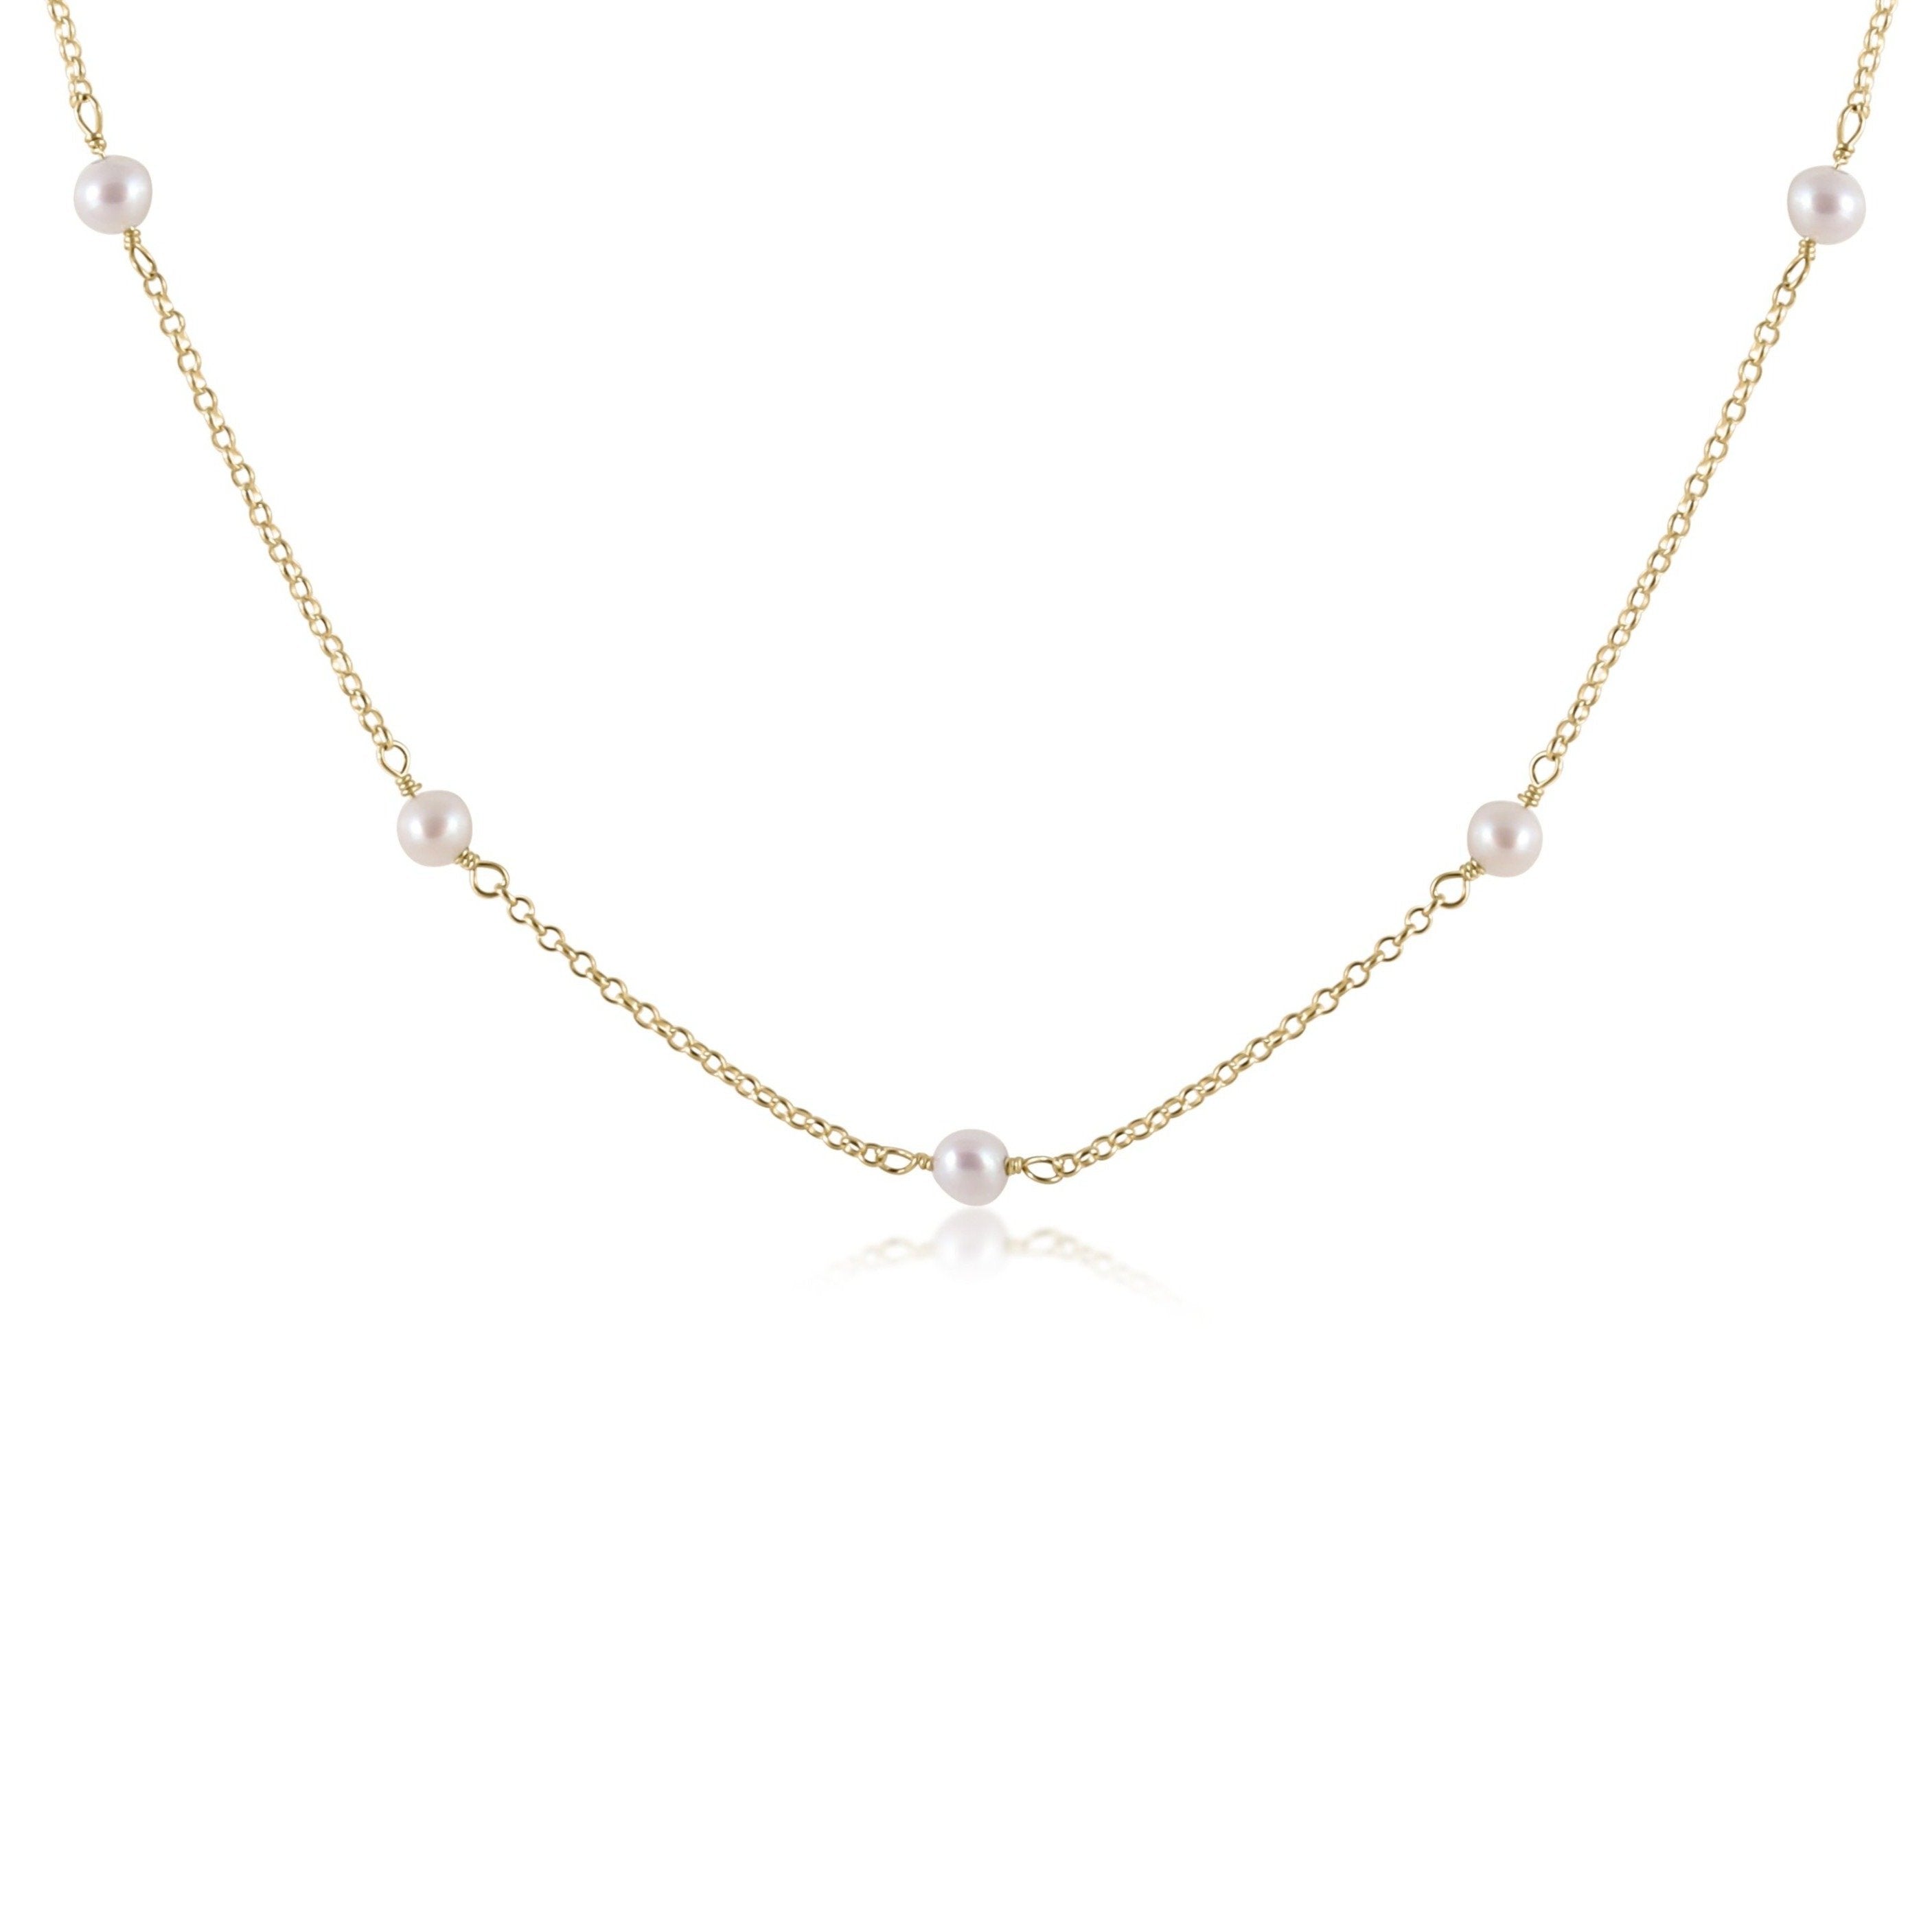 Choker Simplicity Chain Gold 15” - 4mm Pearl